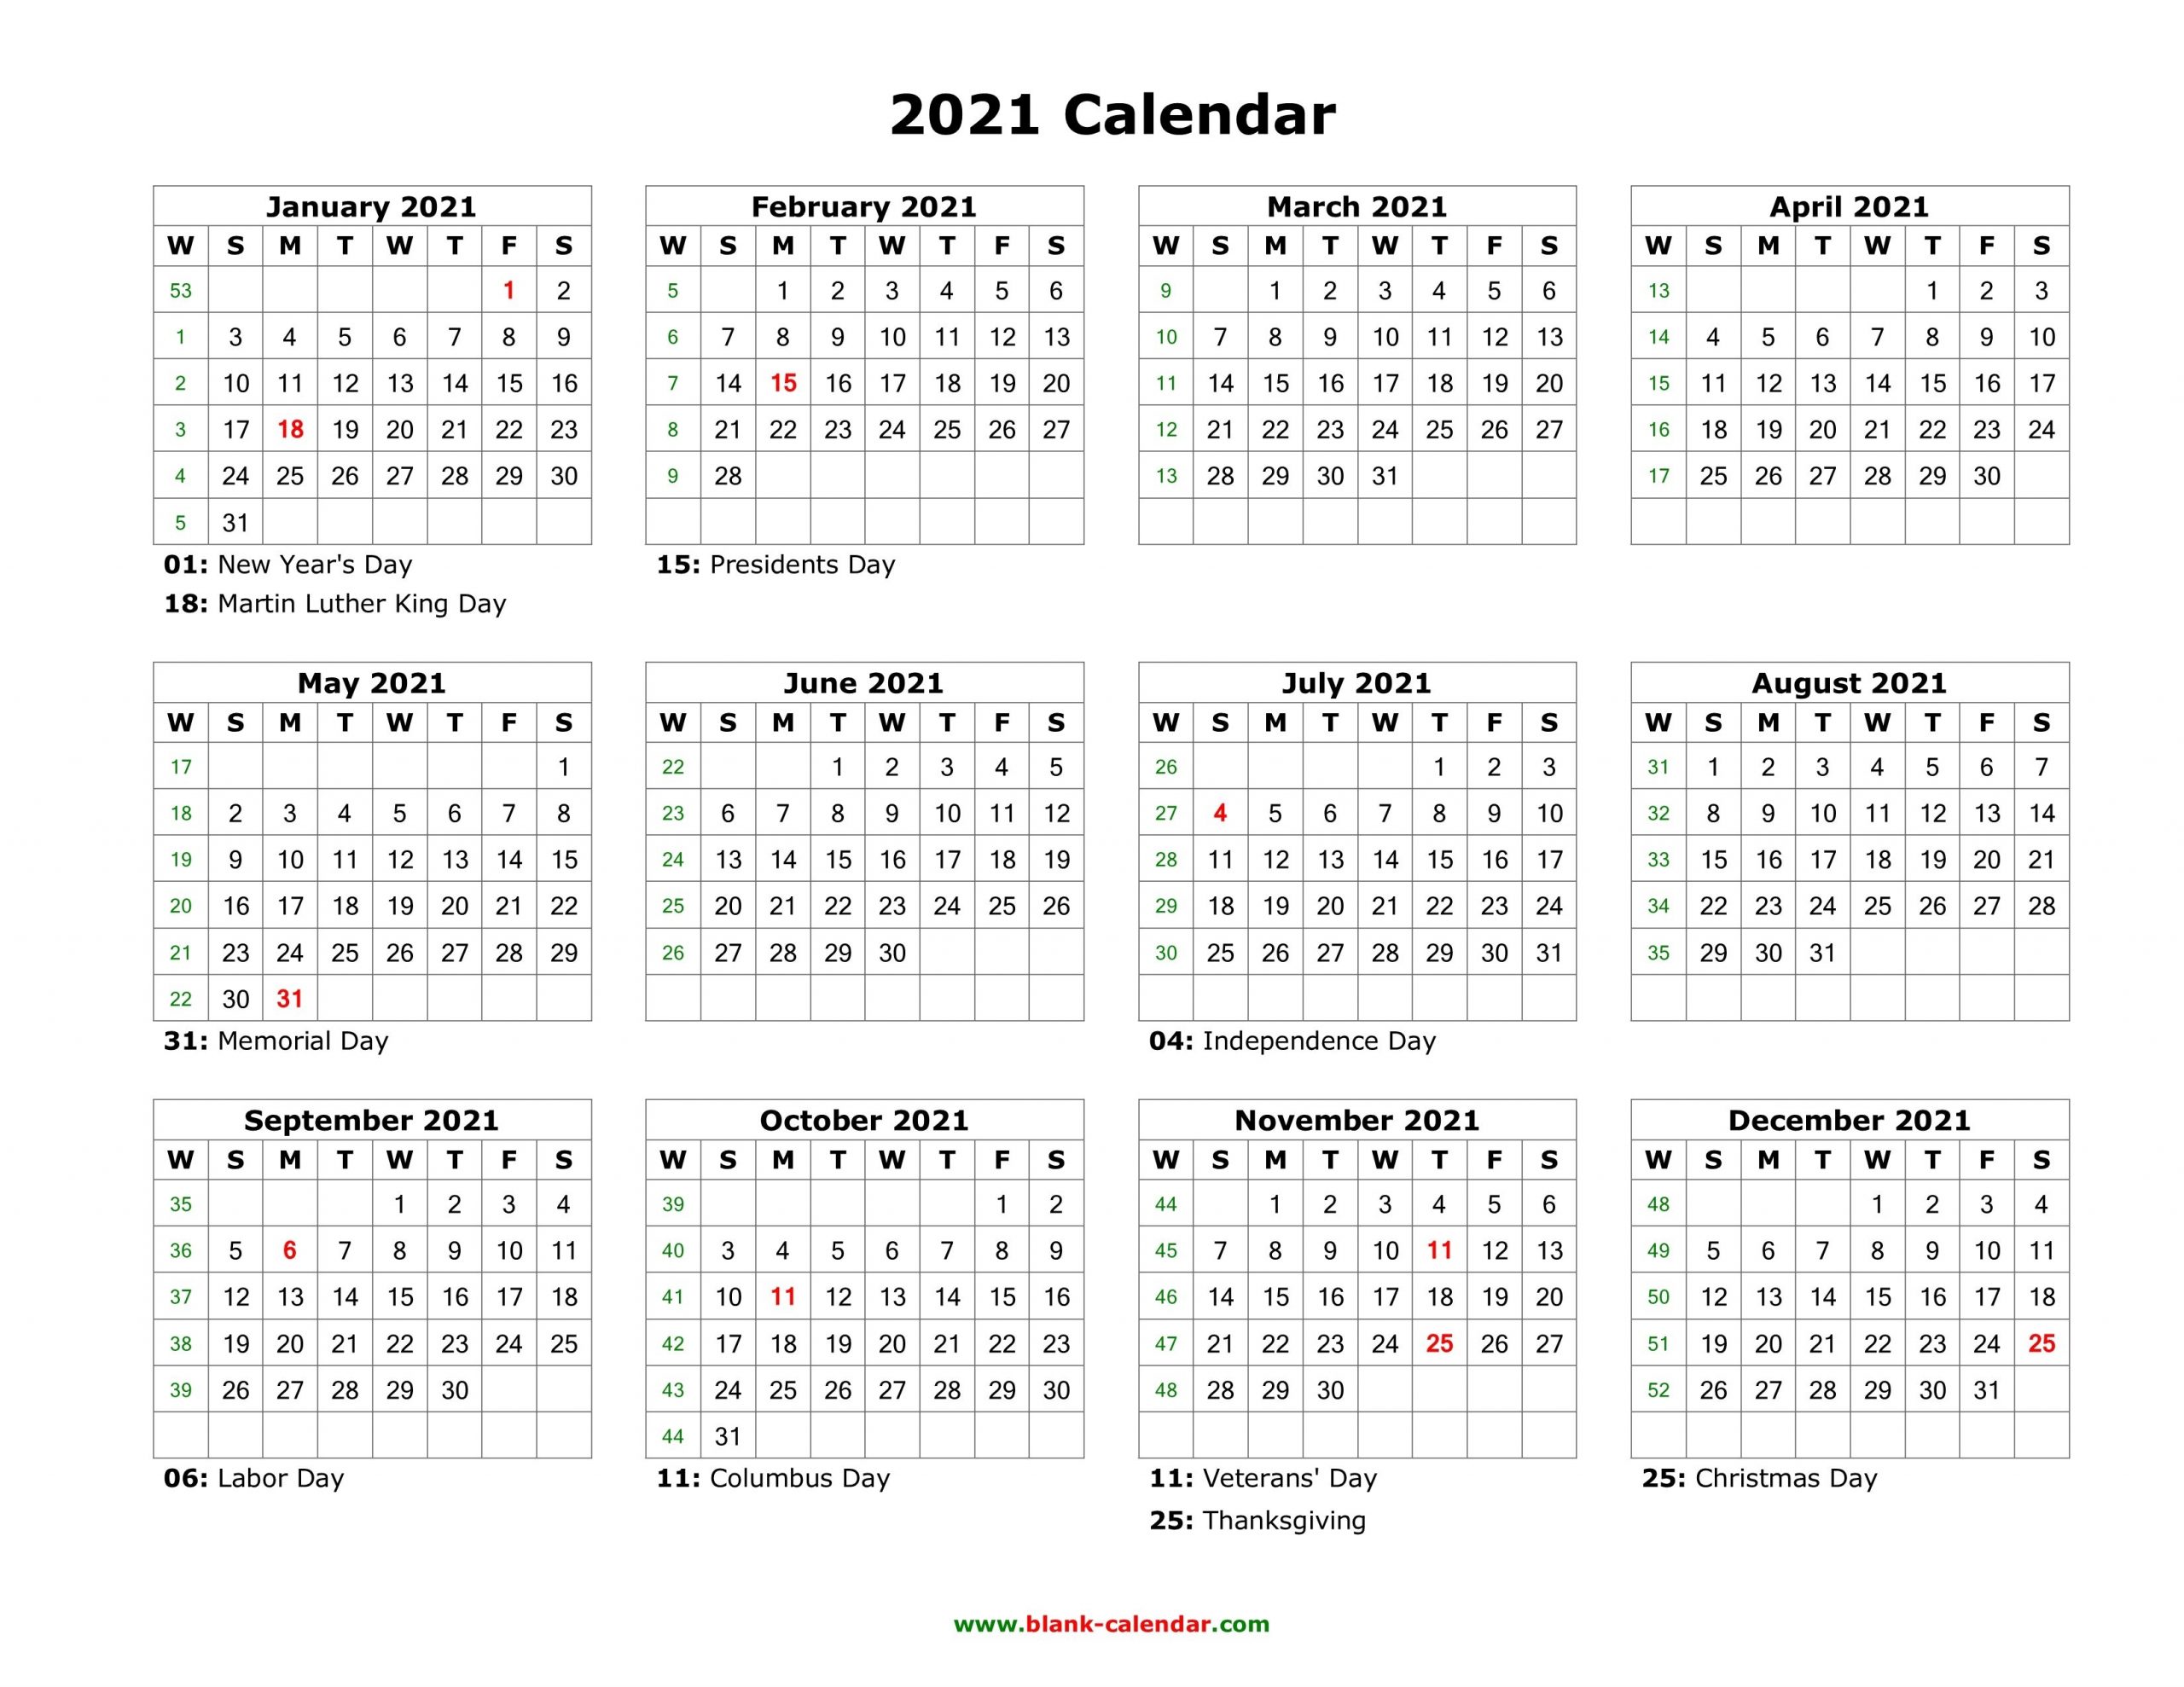 Blank Calendar 2021 | Free Download Calendar Templates